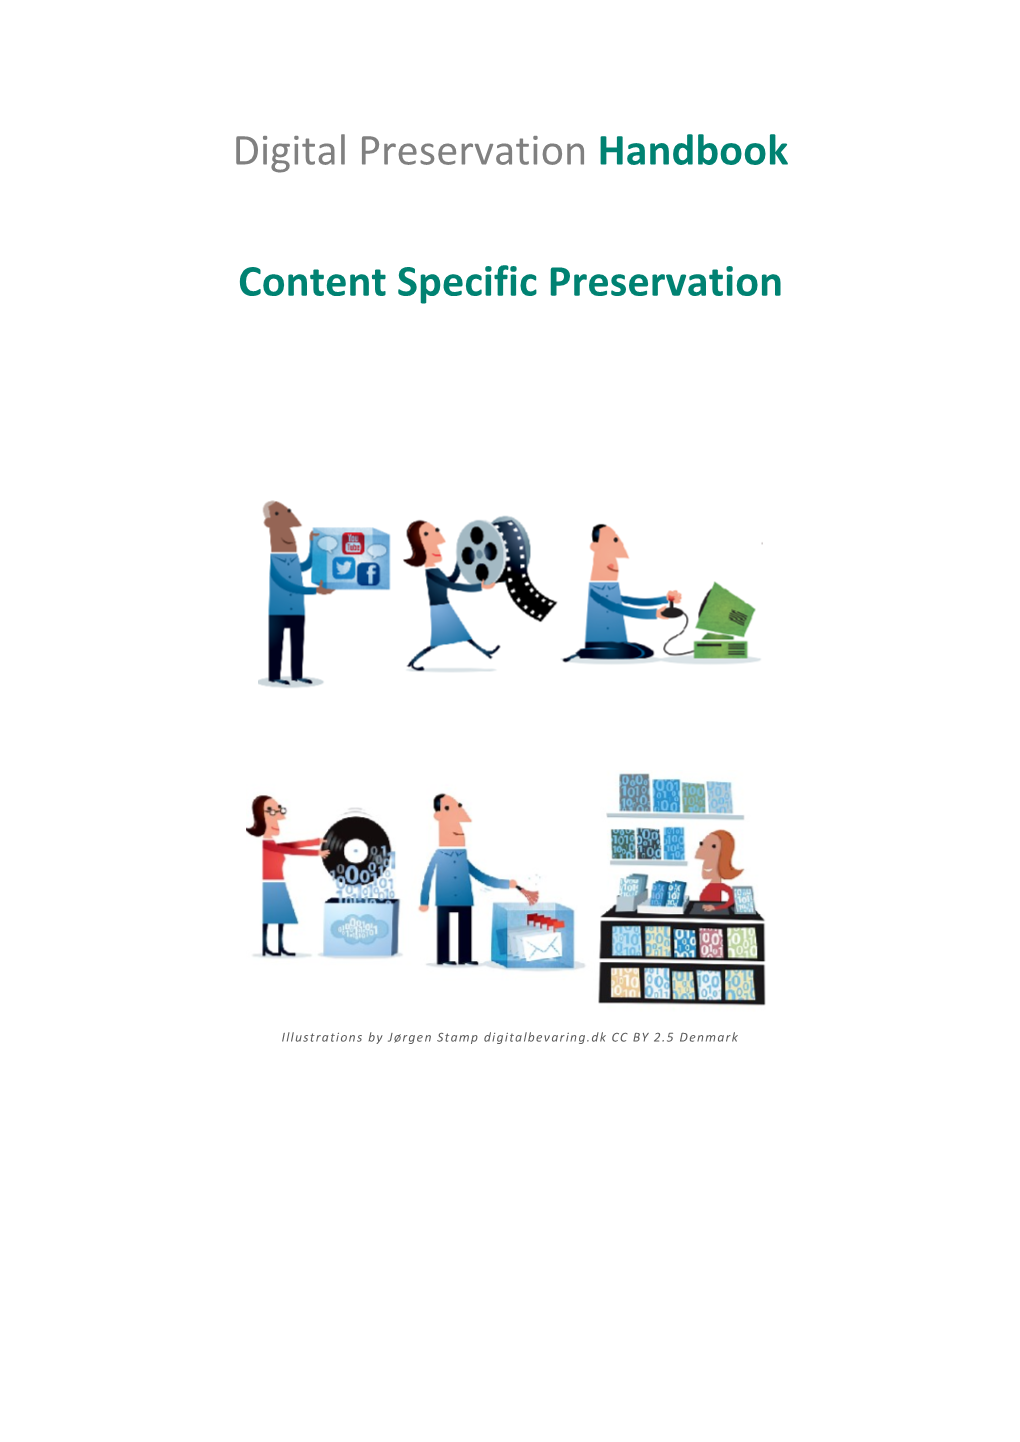 Digital Preservation Handbook Content Specific Preservation